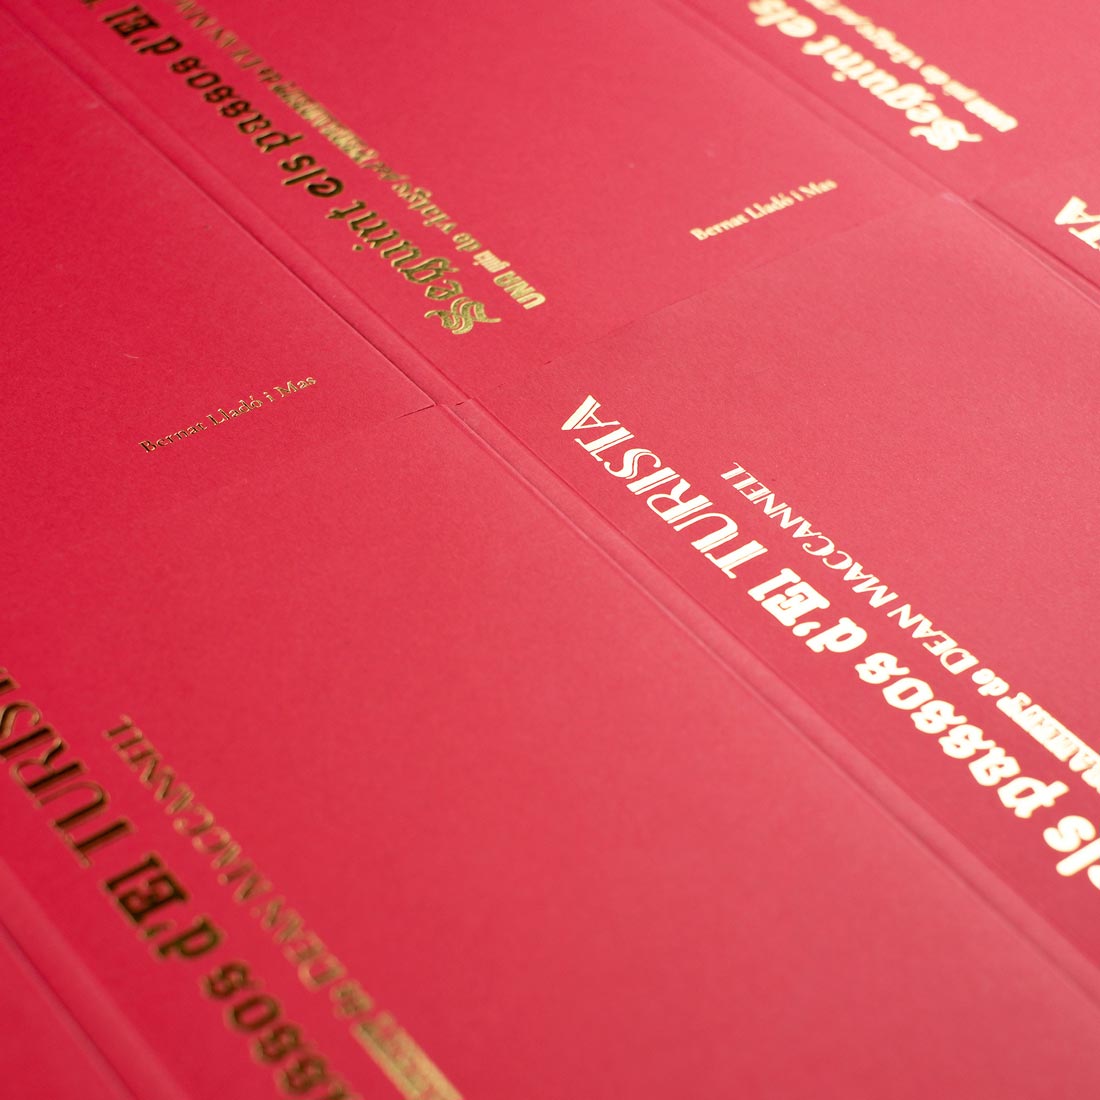 Portada de llibre en vermell y tipografia daurada